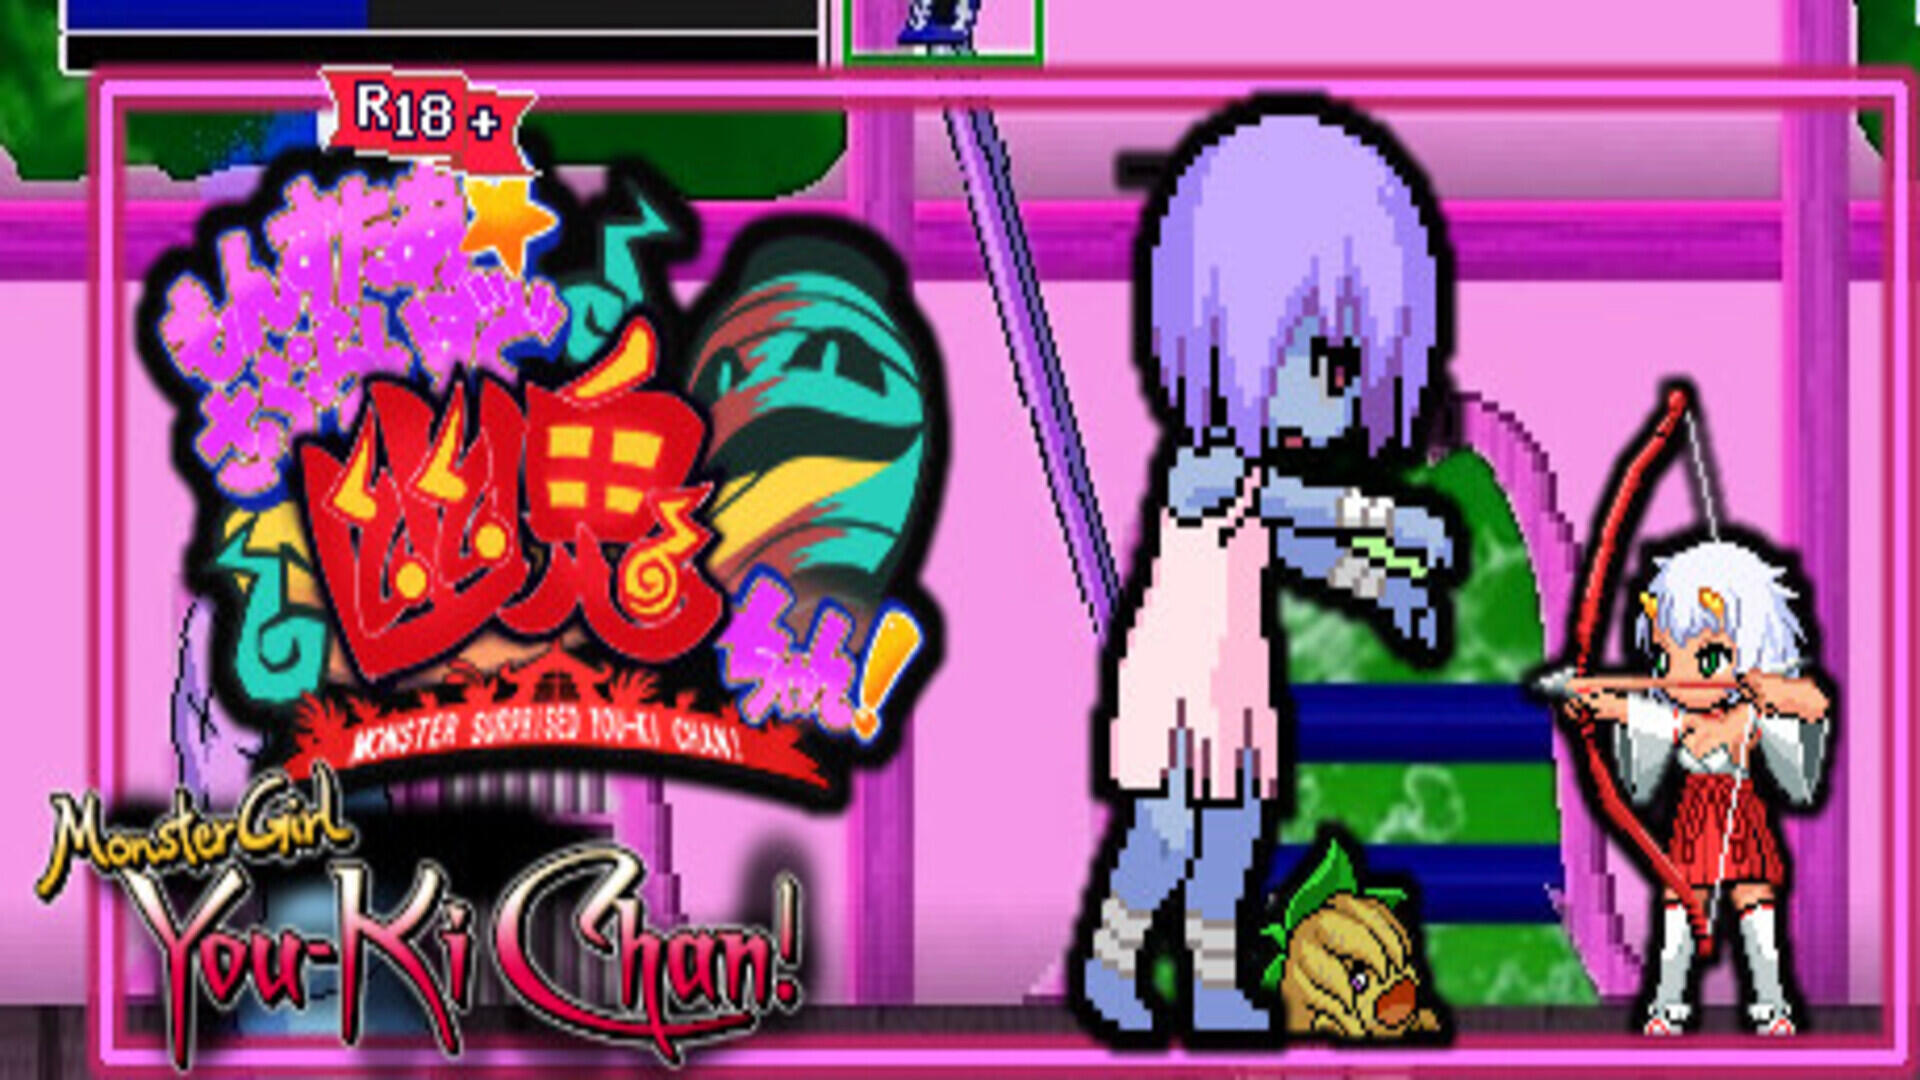 R18Plus Monster Girl You-ki chan (NSFW) (v1.0)